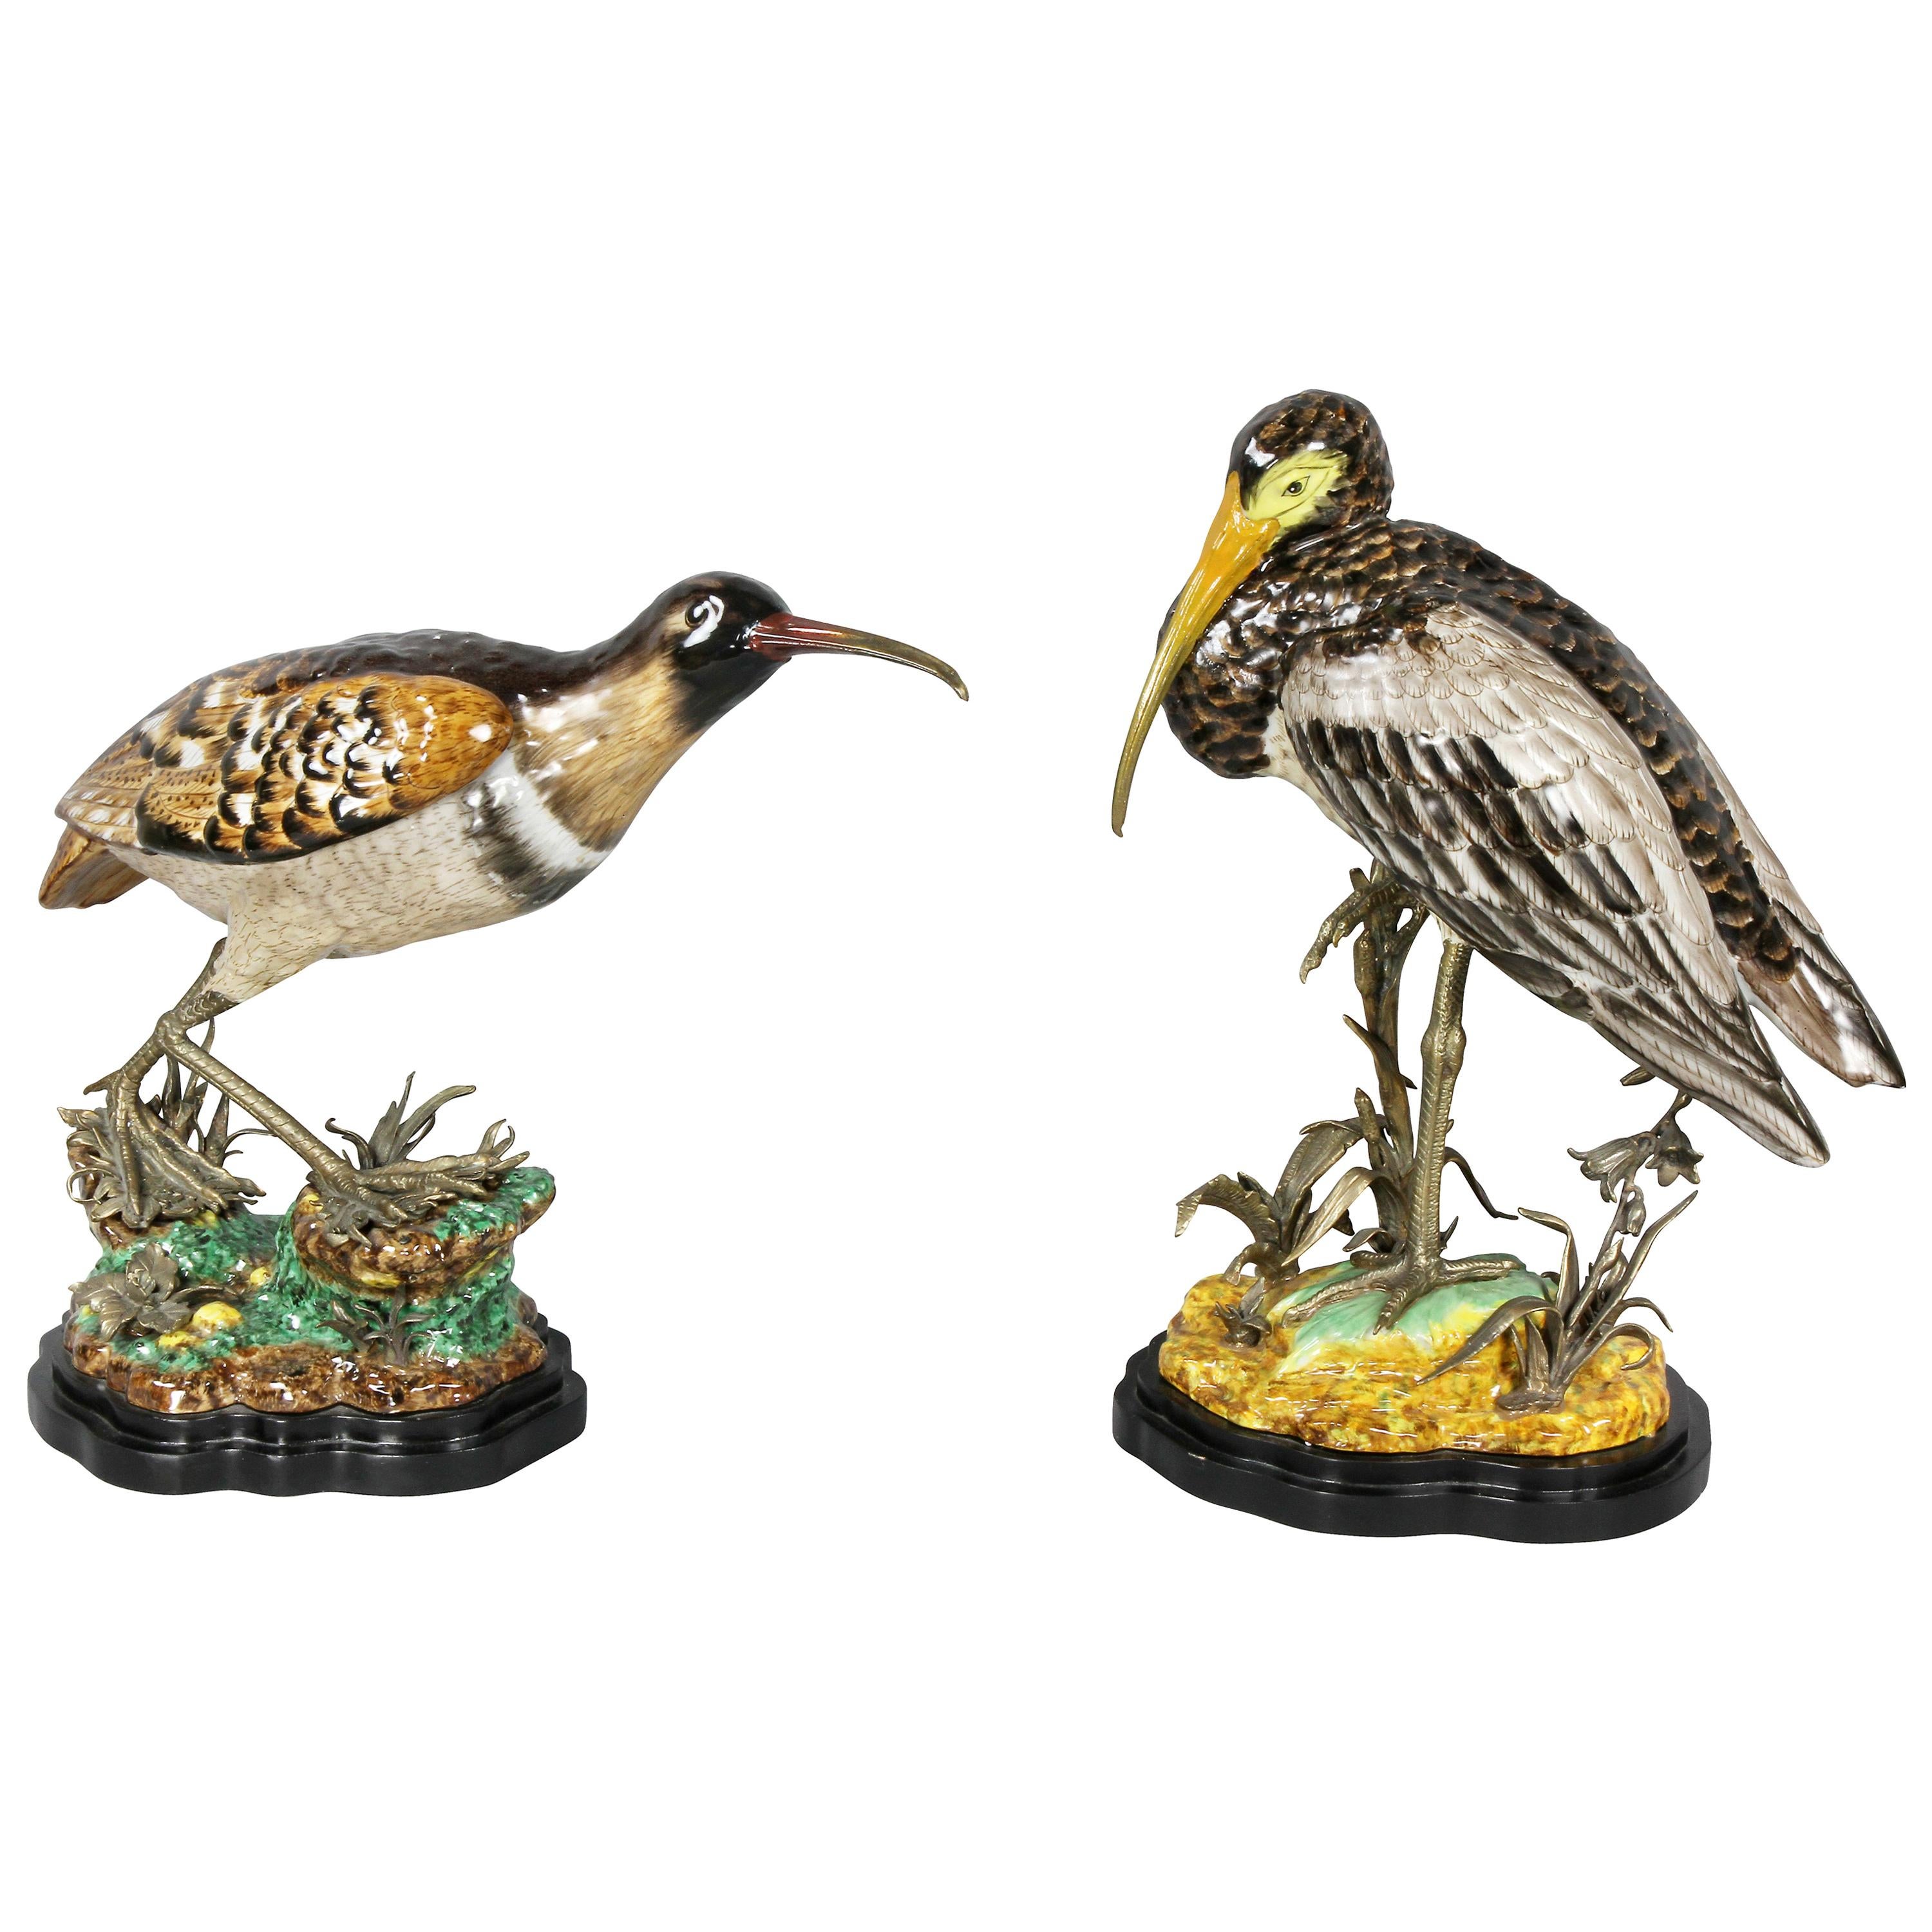 Pair of Porcelain Figures of Birds